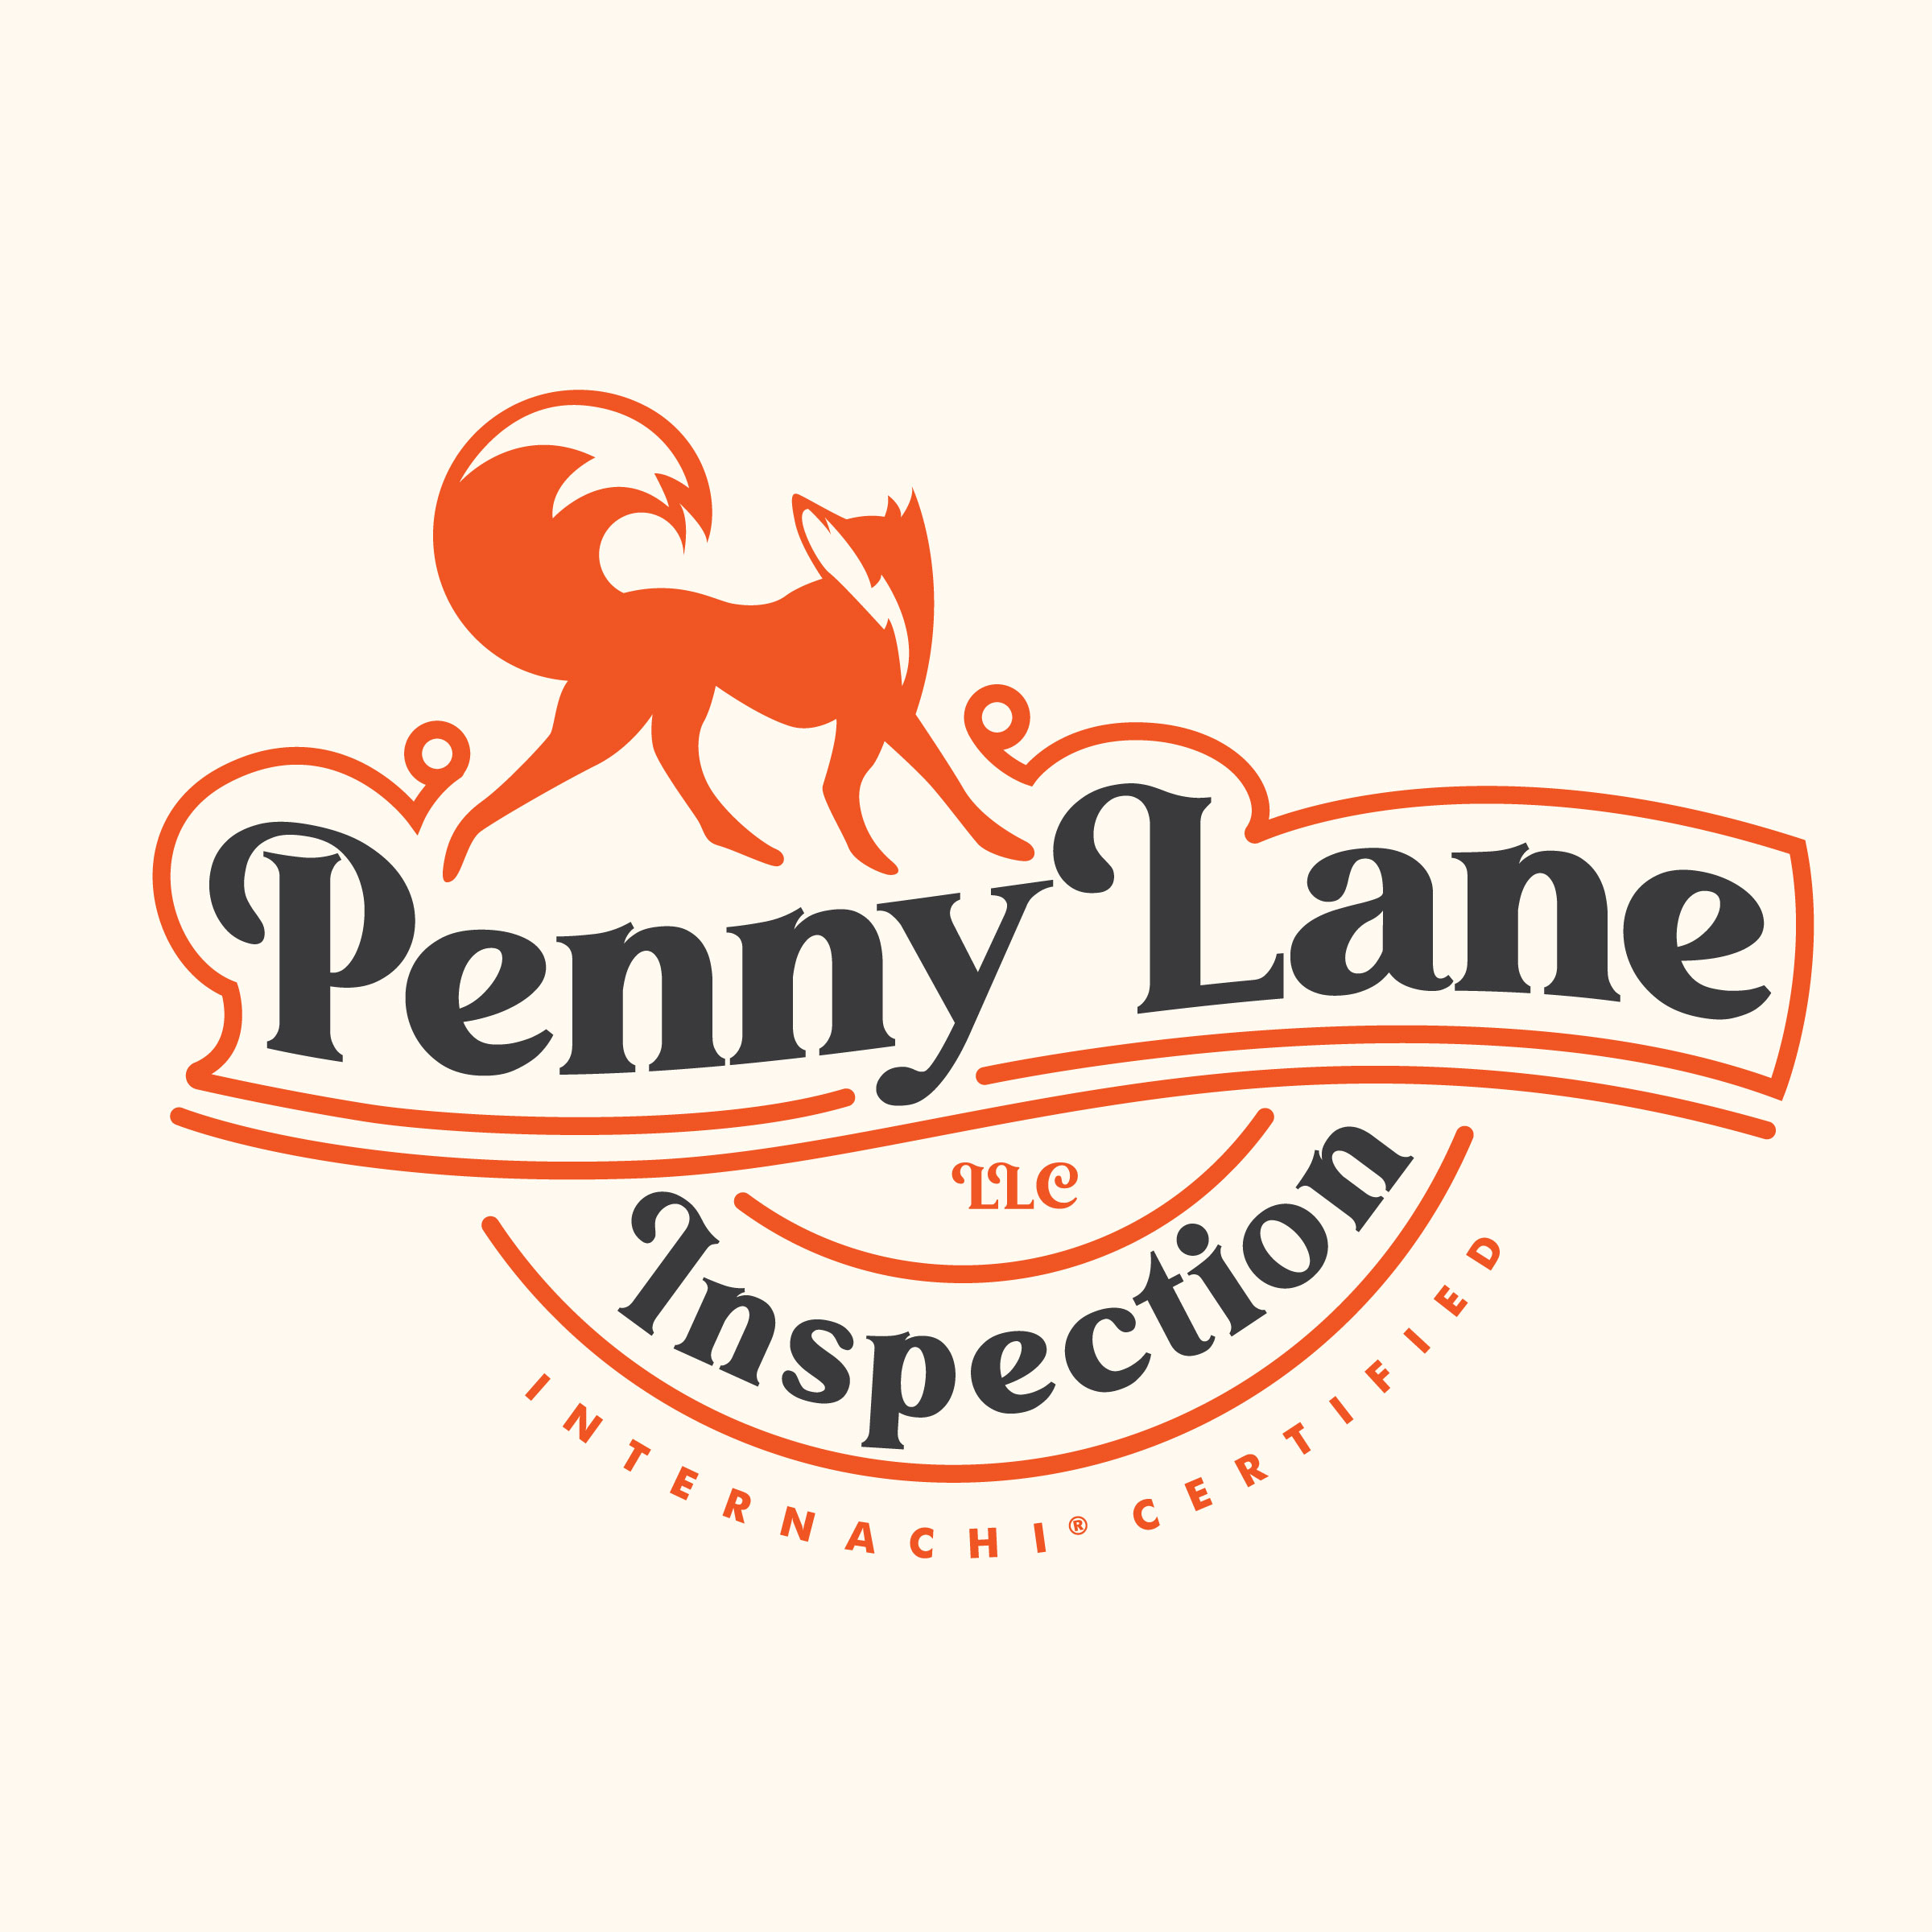 Penny Lane Inspection